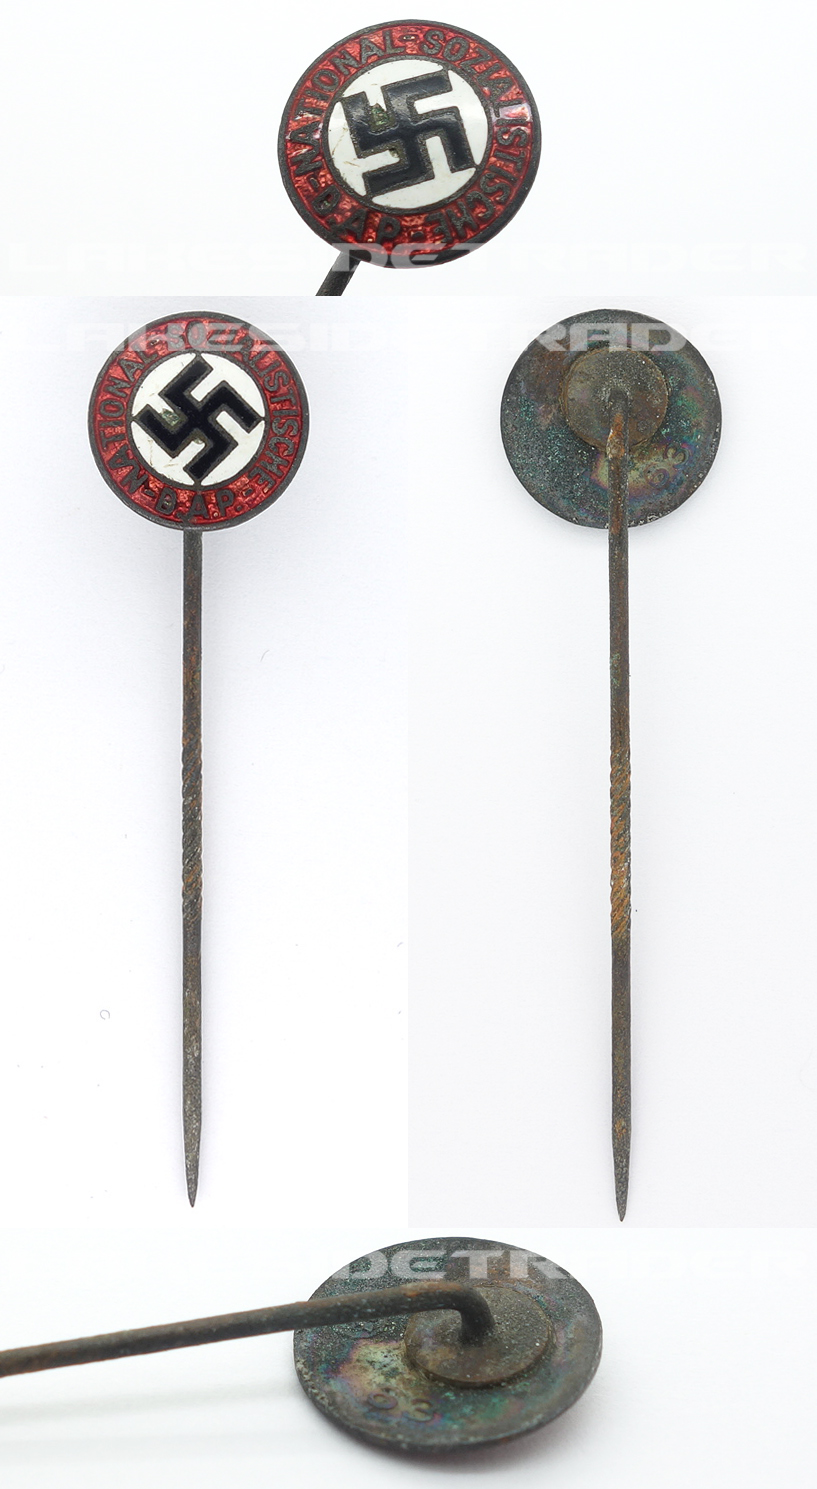 NSDAP Membership Stickpin by S&L